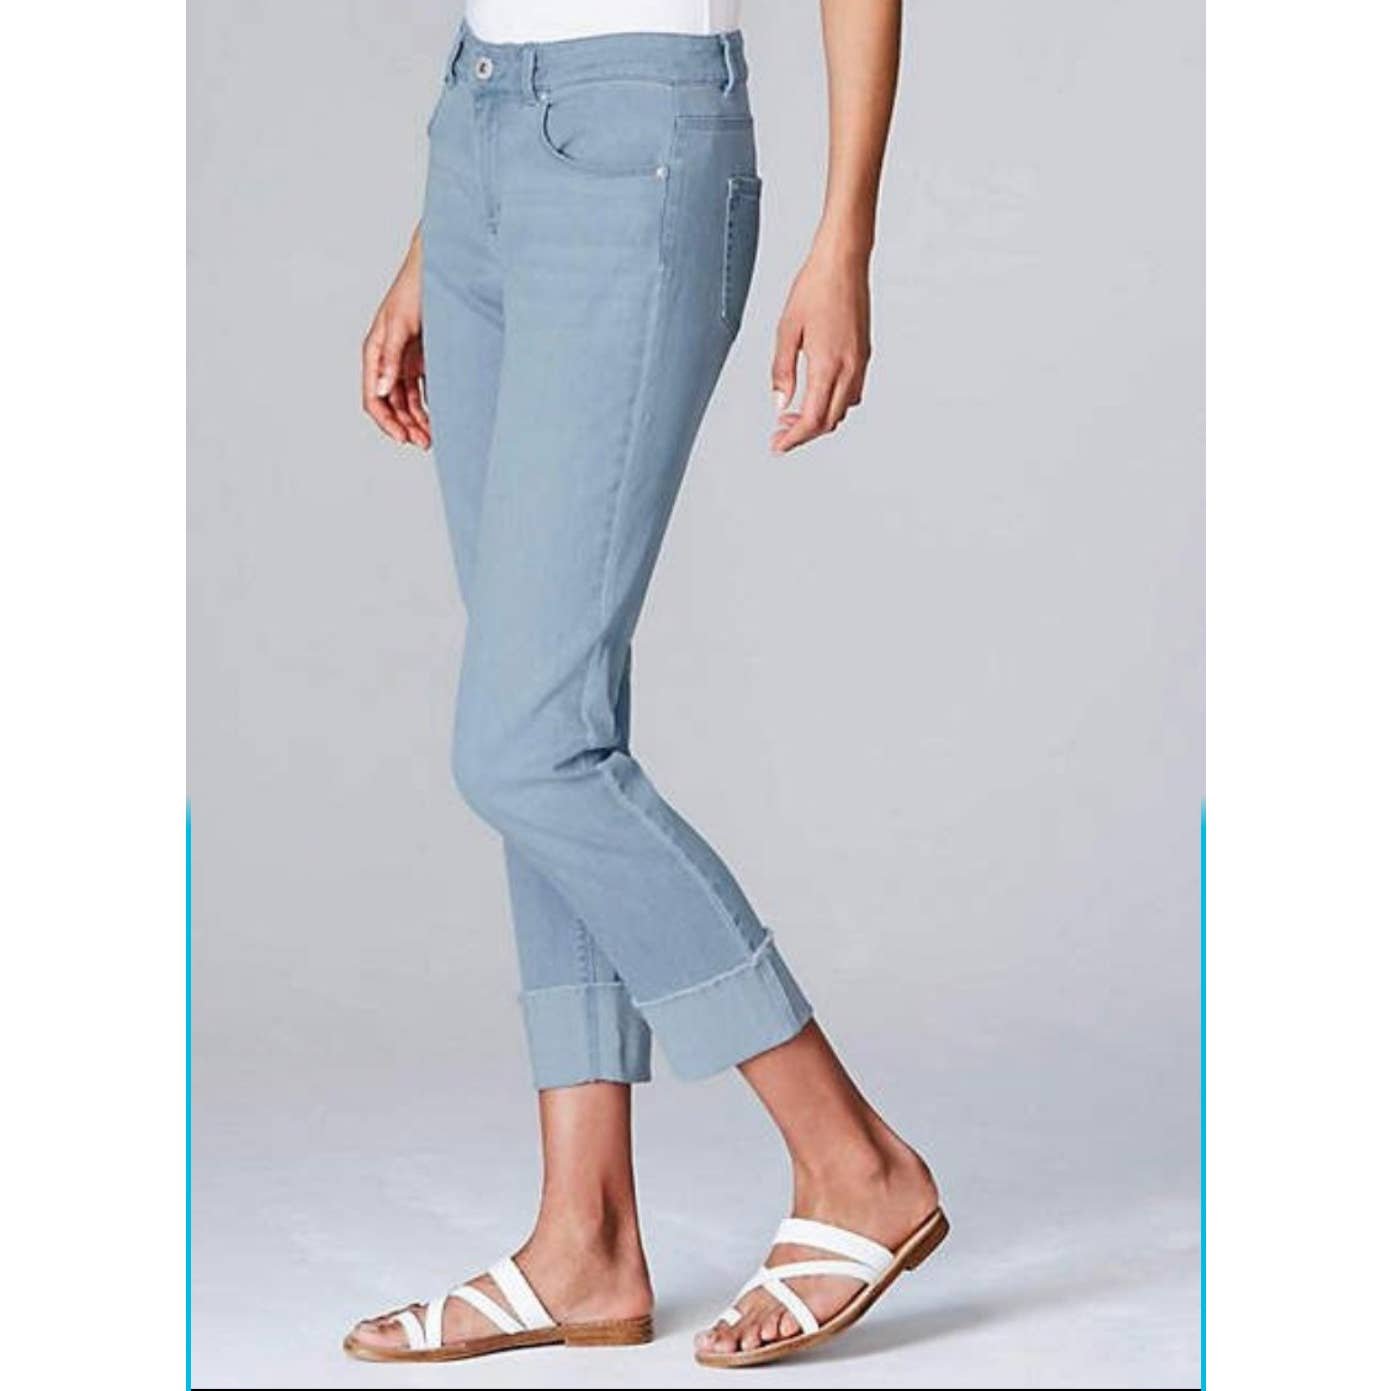 Comfortable J. Jill Denim Authentic Fit Cropped Jeans s